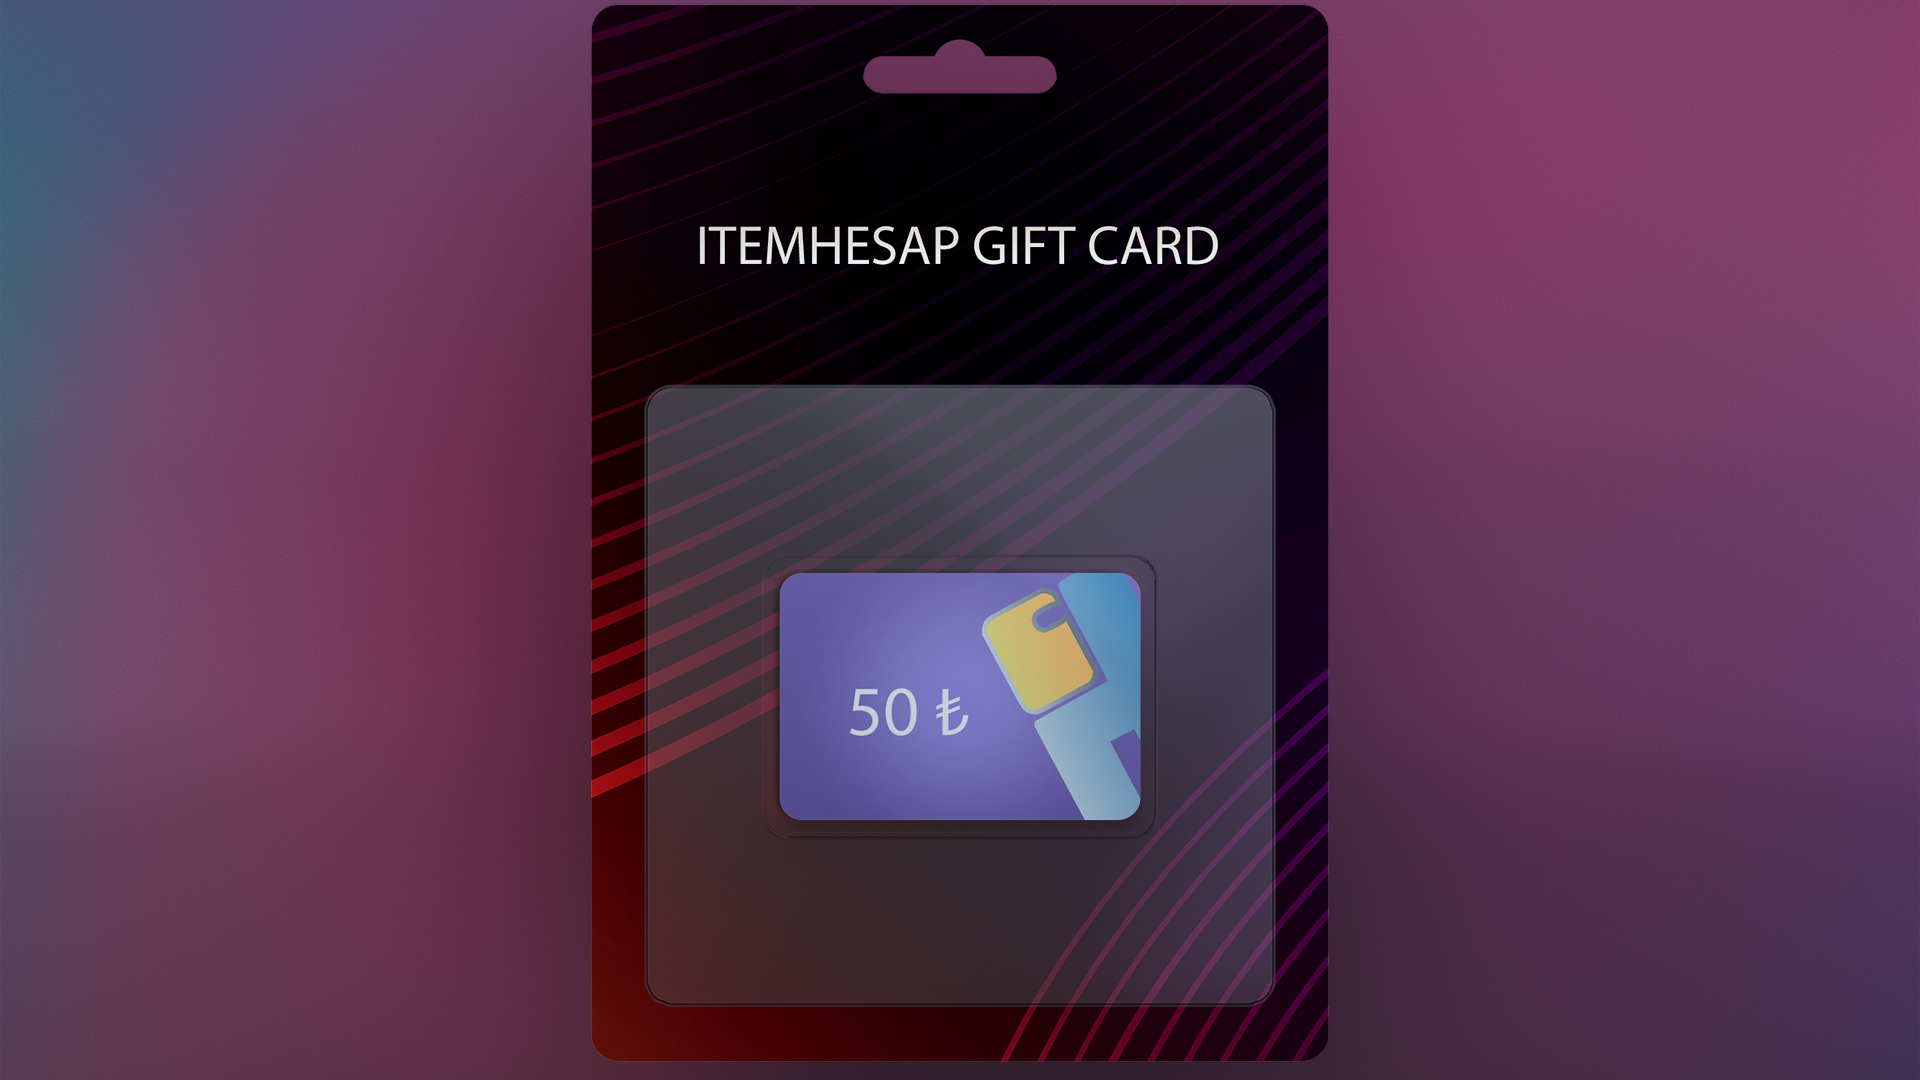 ItemHesap ₺50 Gift Card 3.53 $